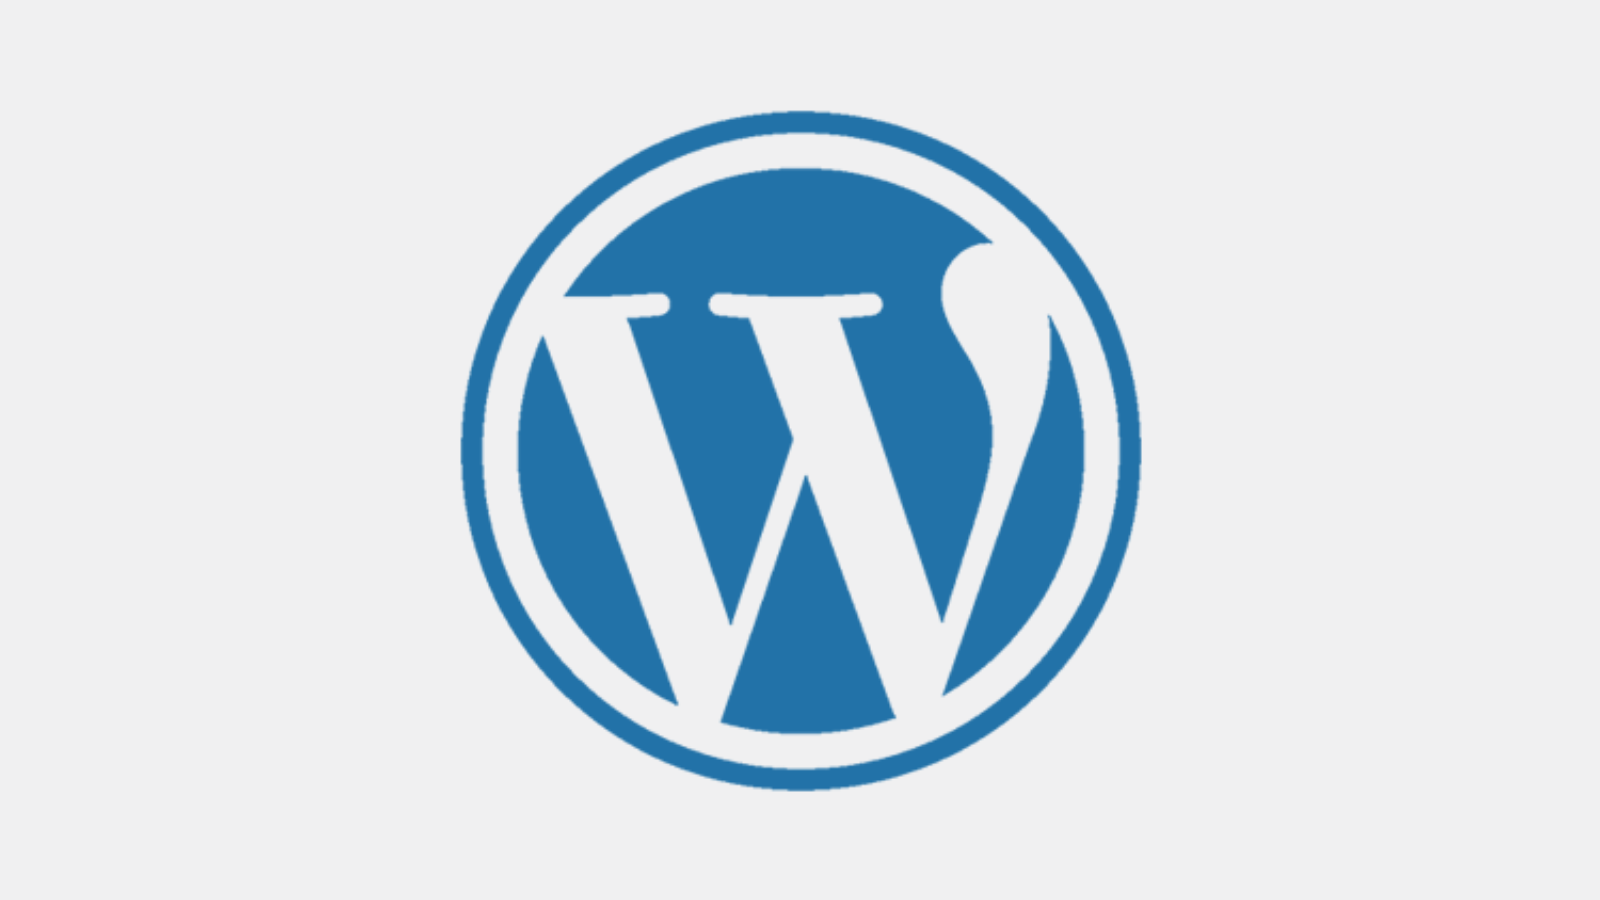 wordpress-logo-blue